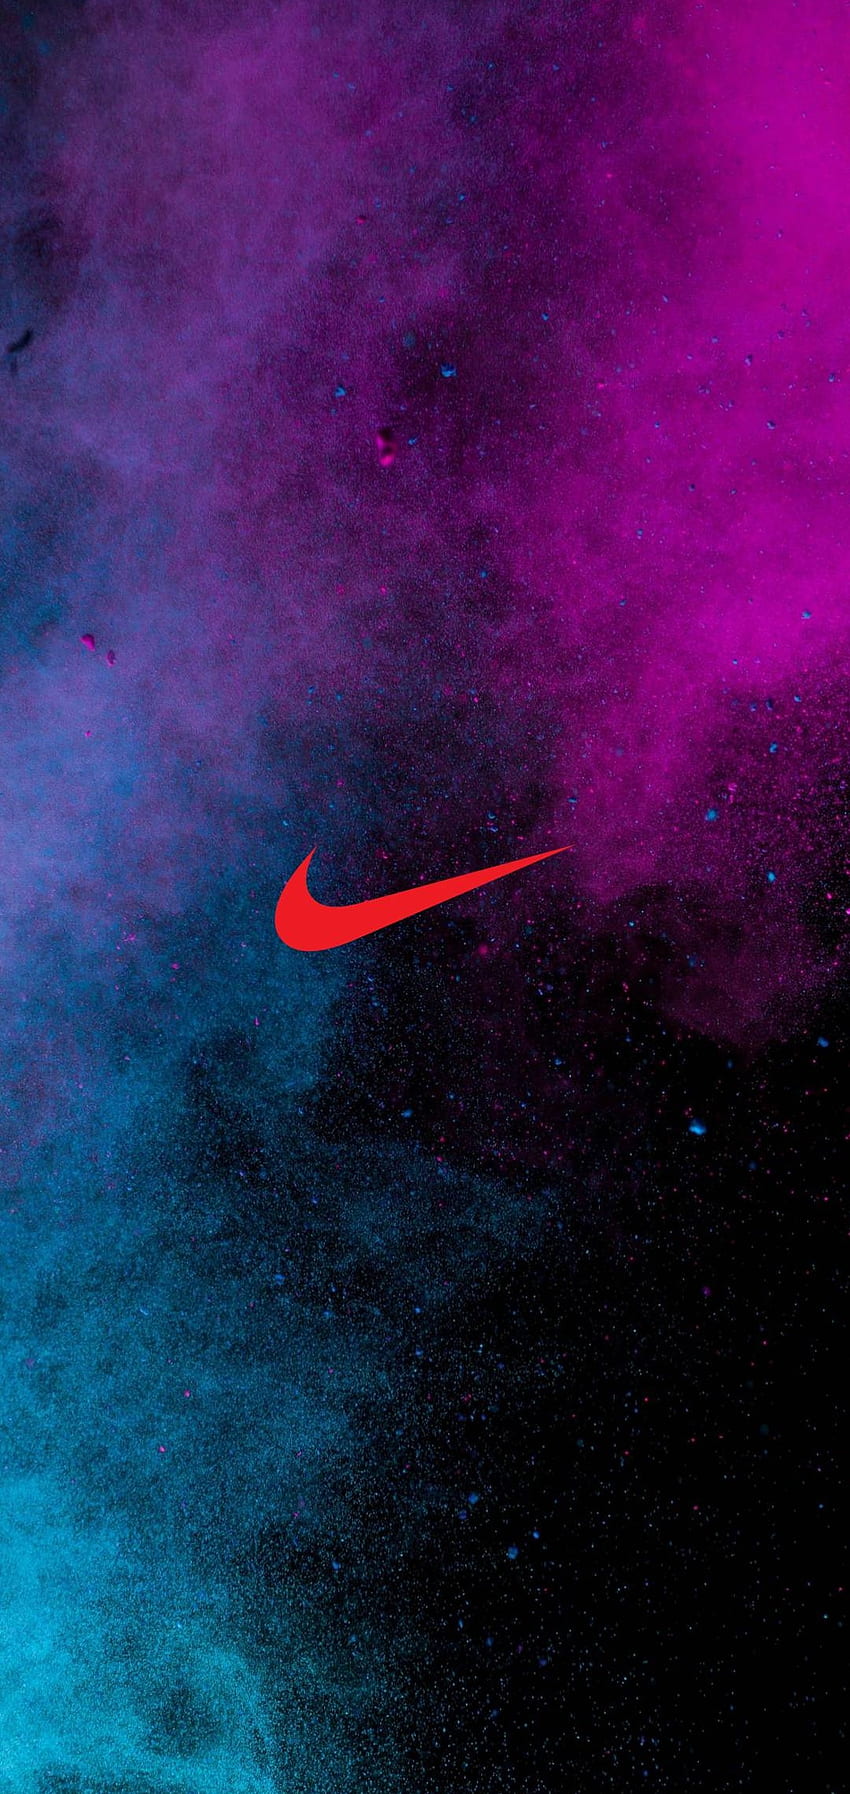 Nike Ungu - , Latar Belakang Nike Ungu di Kelelawar, iPhone Nike Terbaik wallpaper ponsel HD